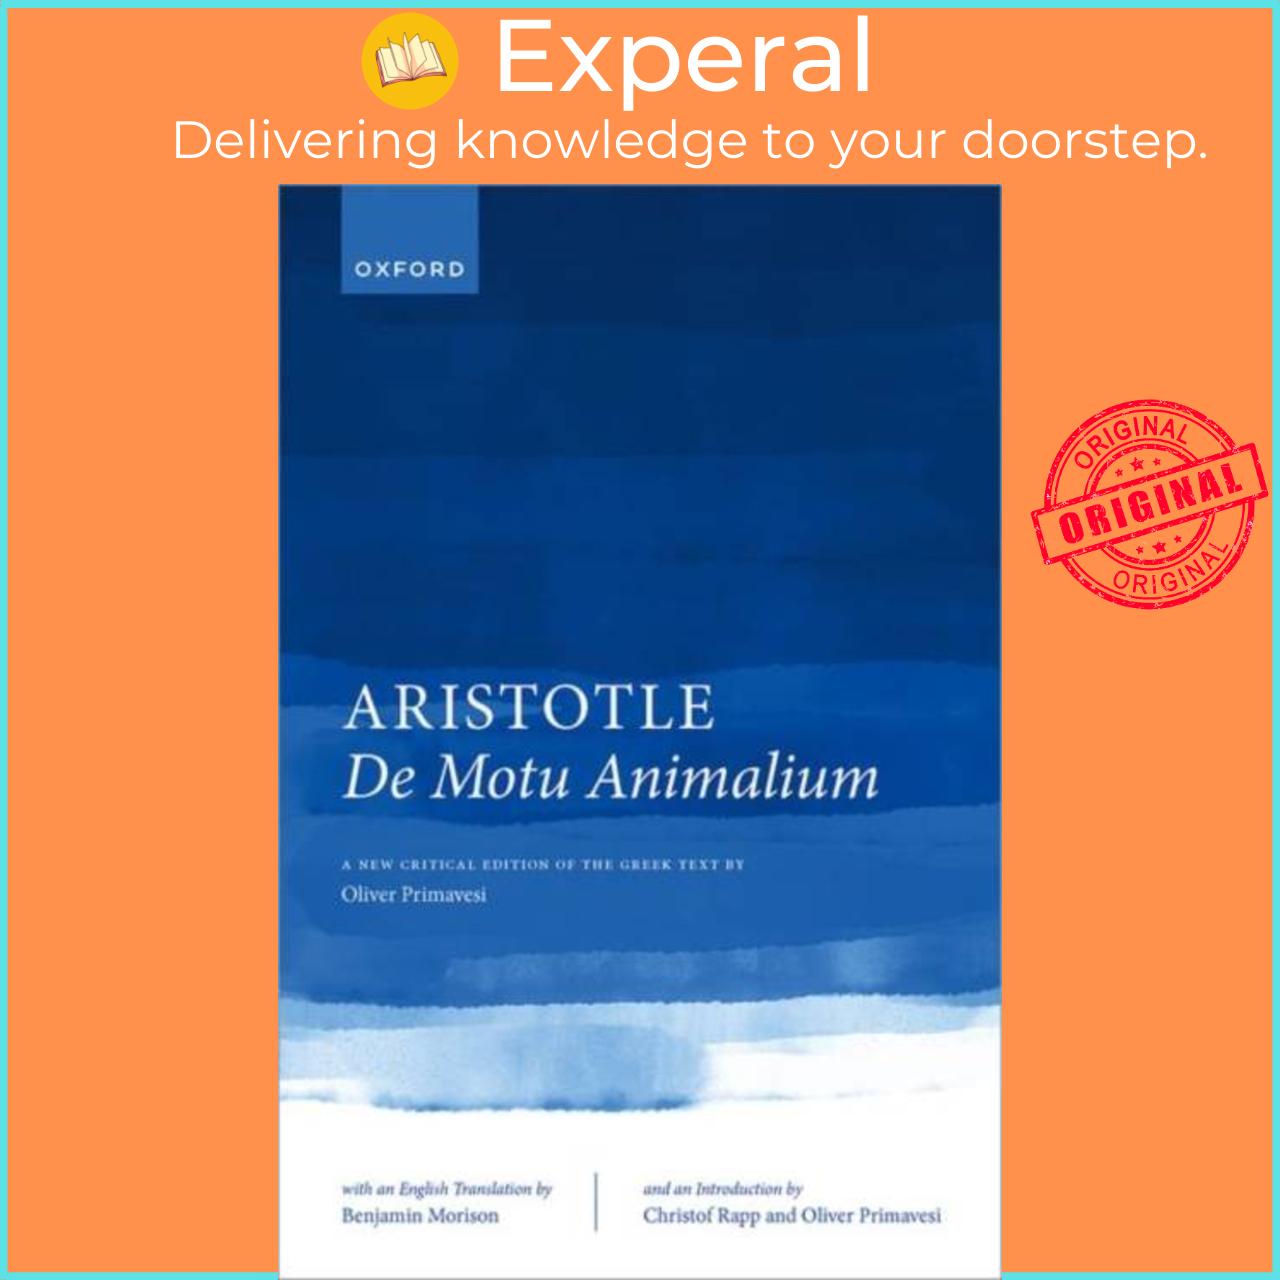 Sách - Aristotle, De motu animalium - Text and Translation by  (UK edition, hardcover)